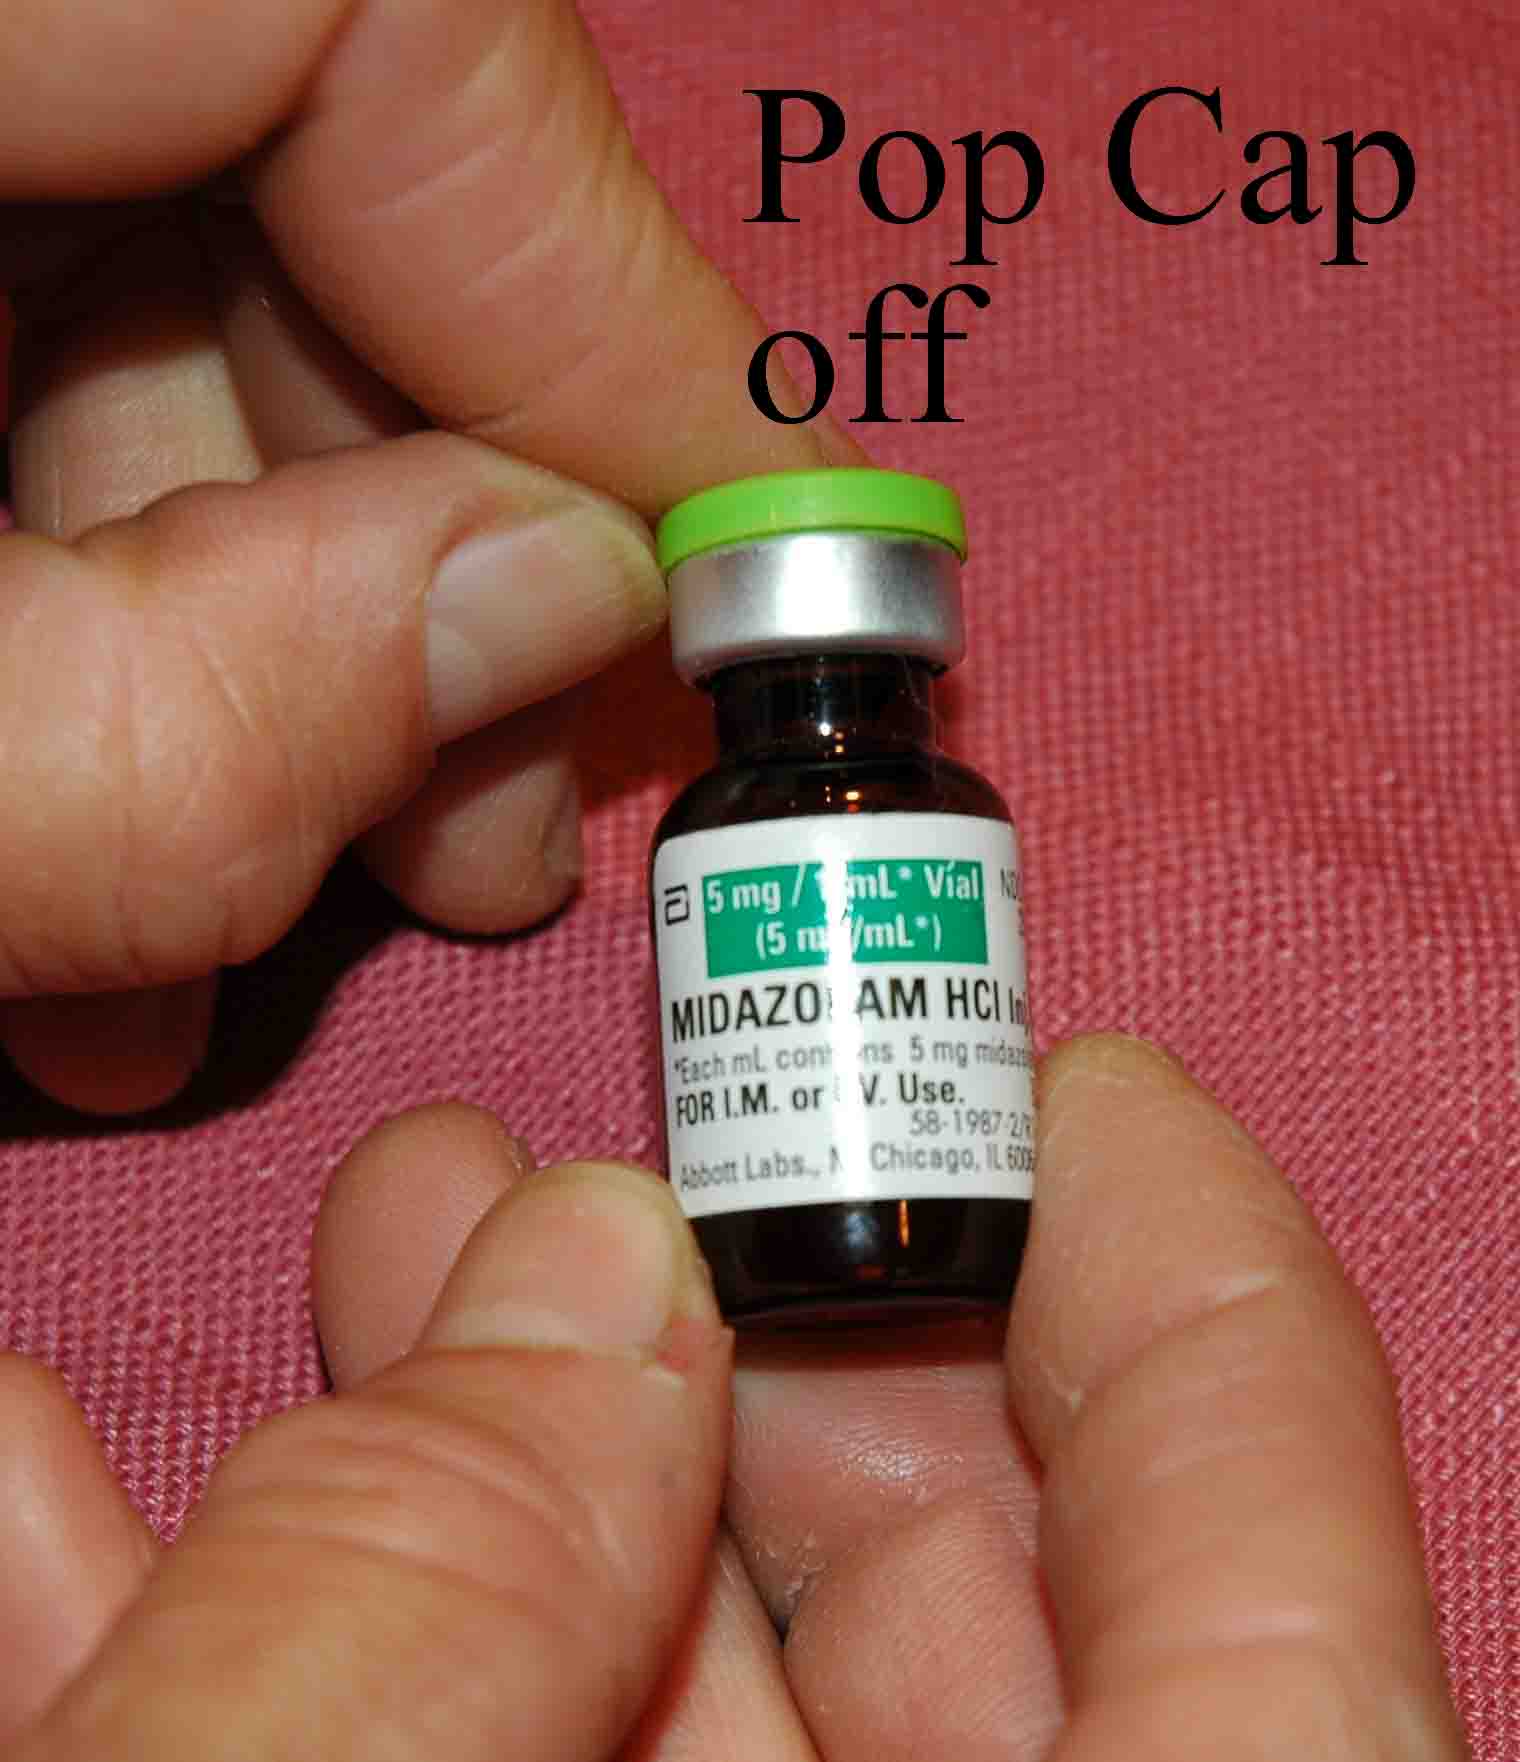 Pop cap off the midazolam vial